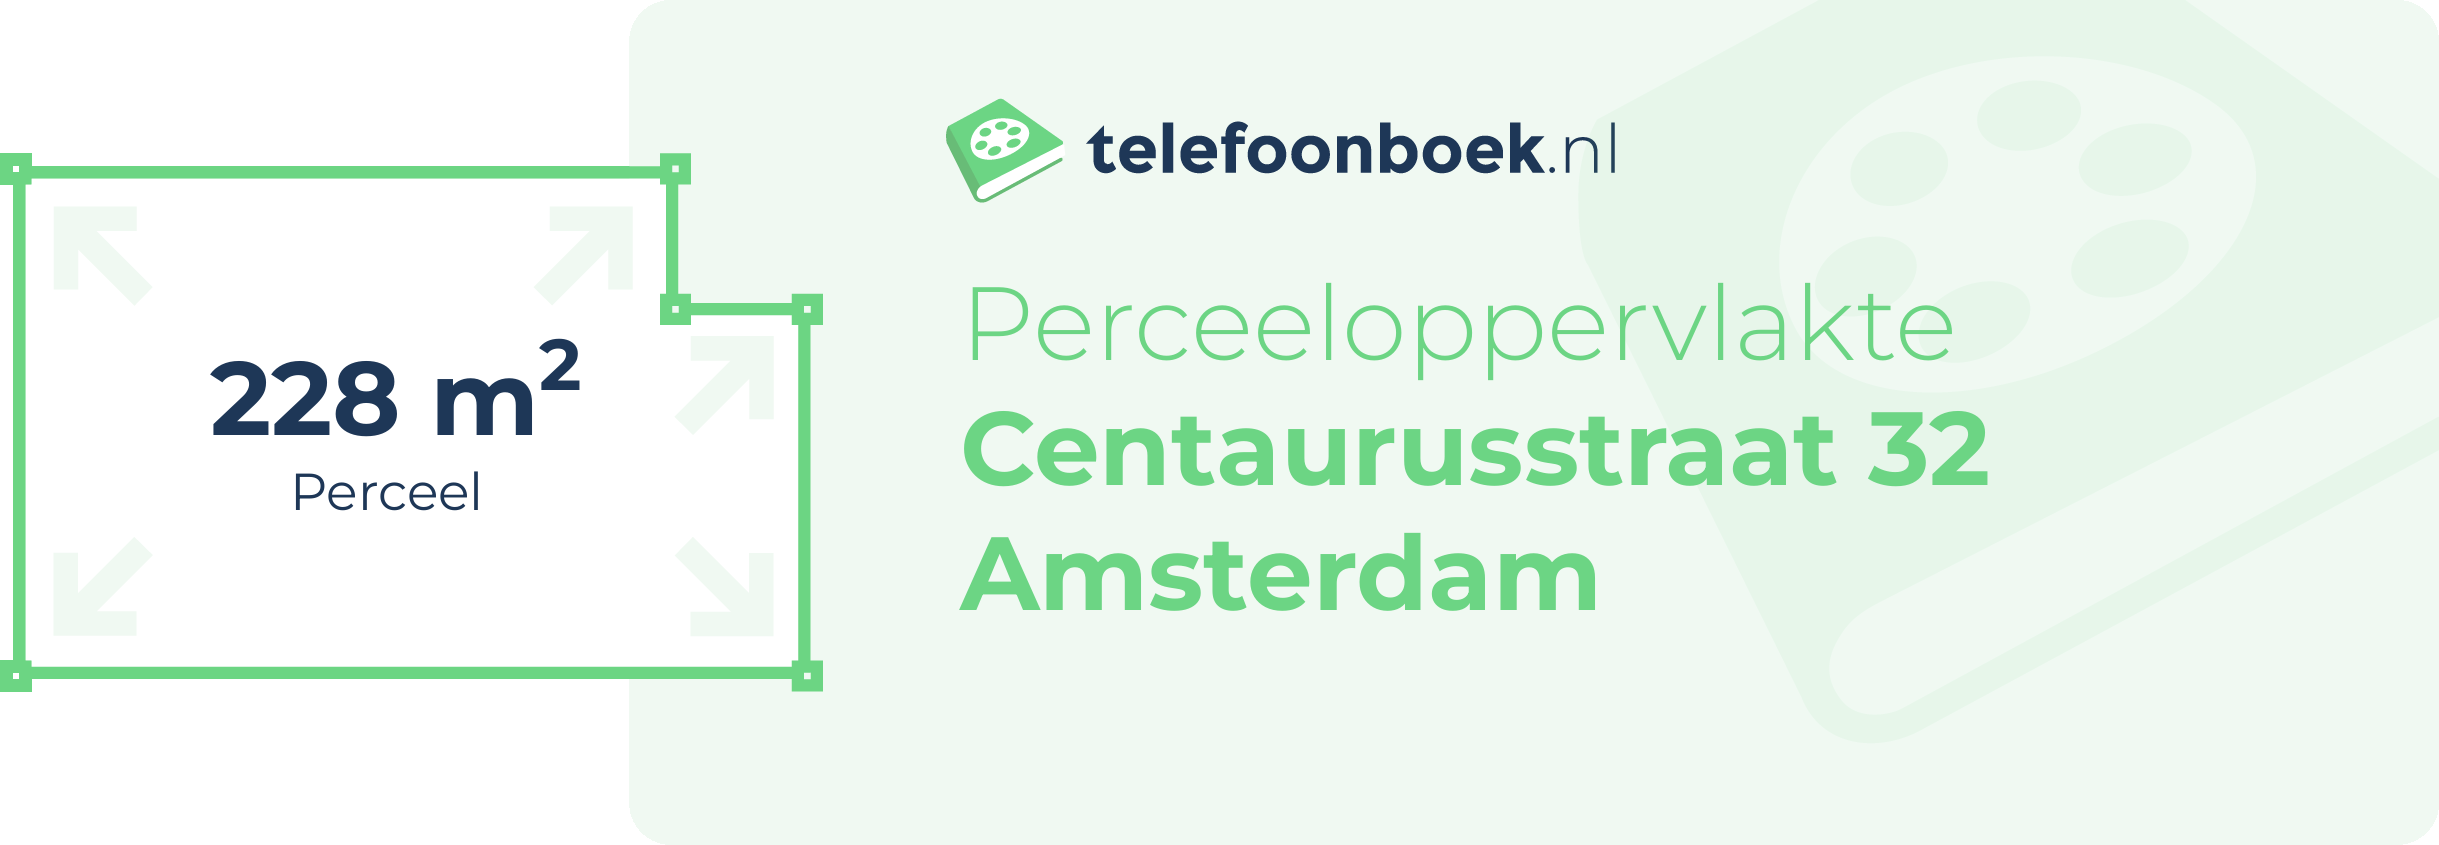 Perceeloppervlakte Centaurusstraat 32 Amsterdam